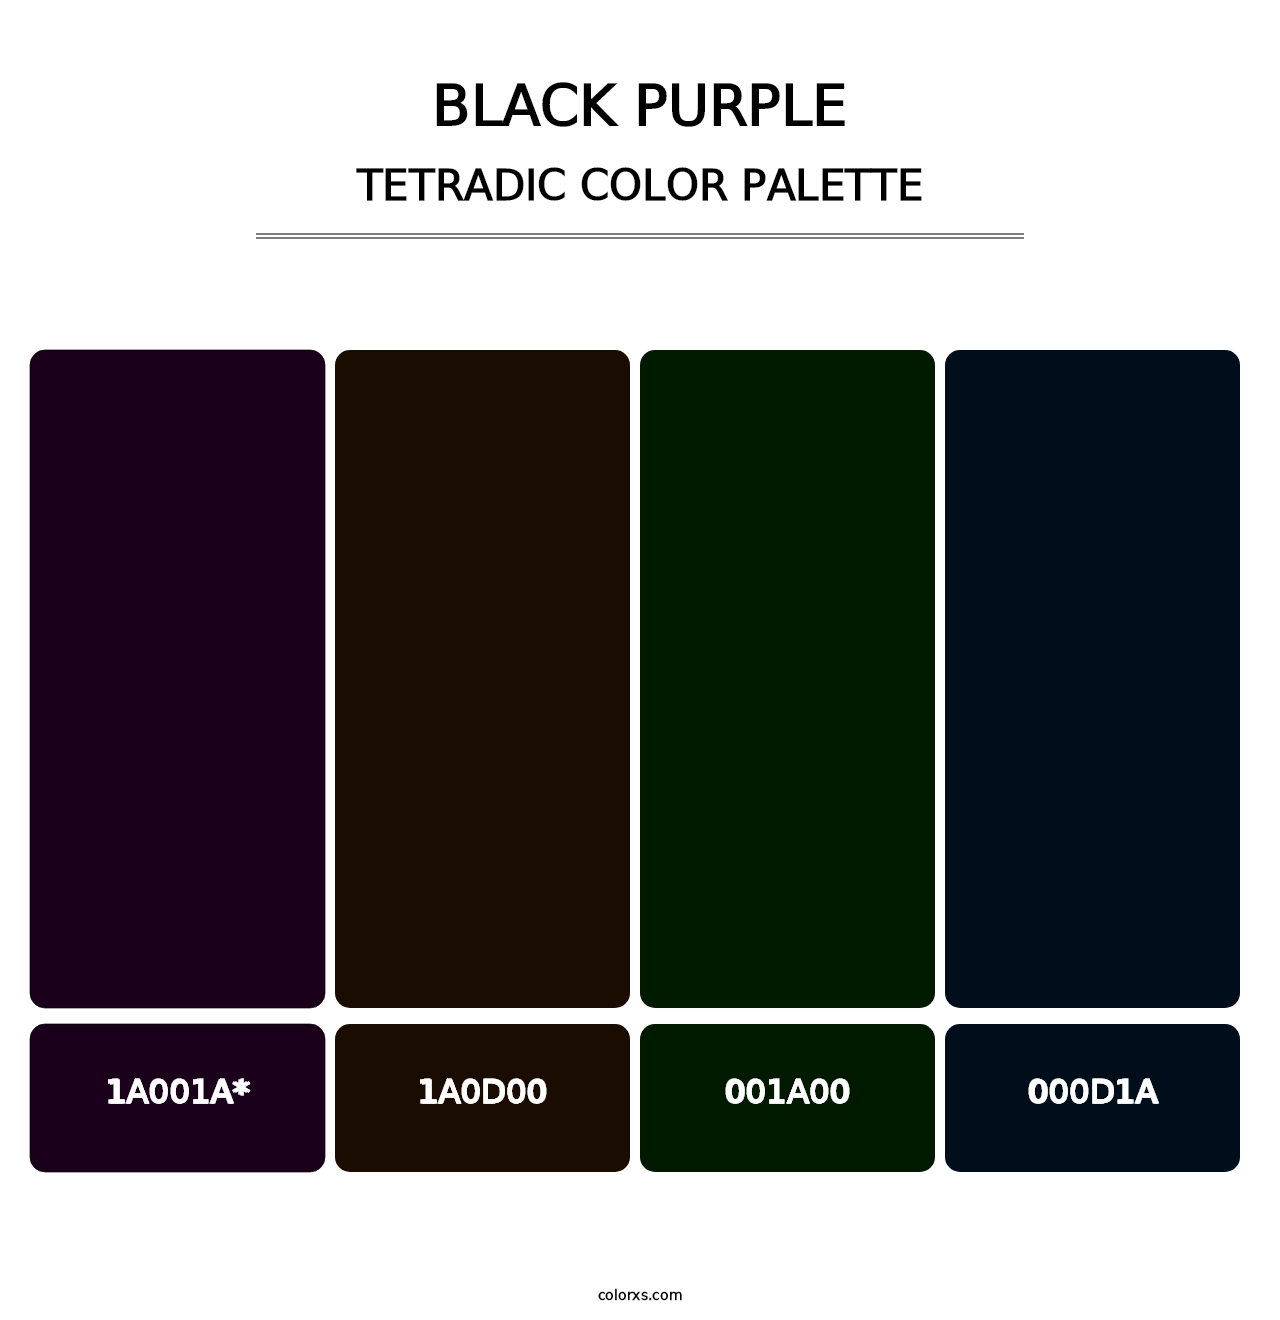 Black Purple - Tetradic Color Palette